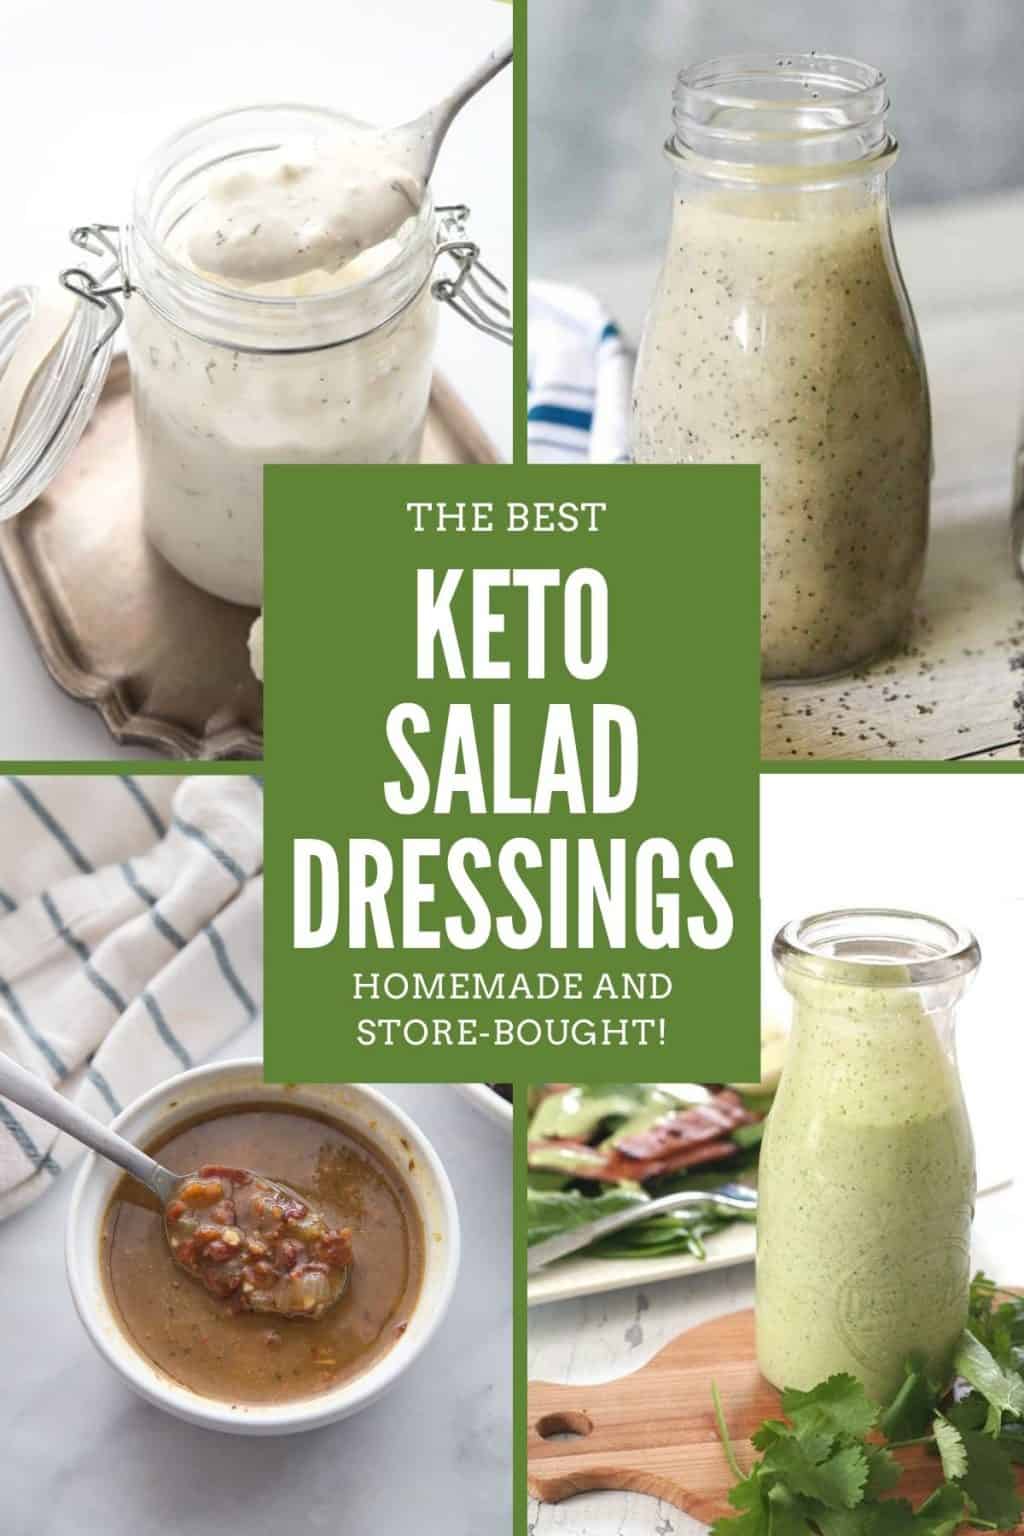 best salad dressing keto diet Keto salad diet dressing popsugar friendly dressings fitness source